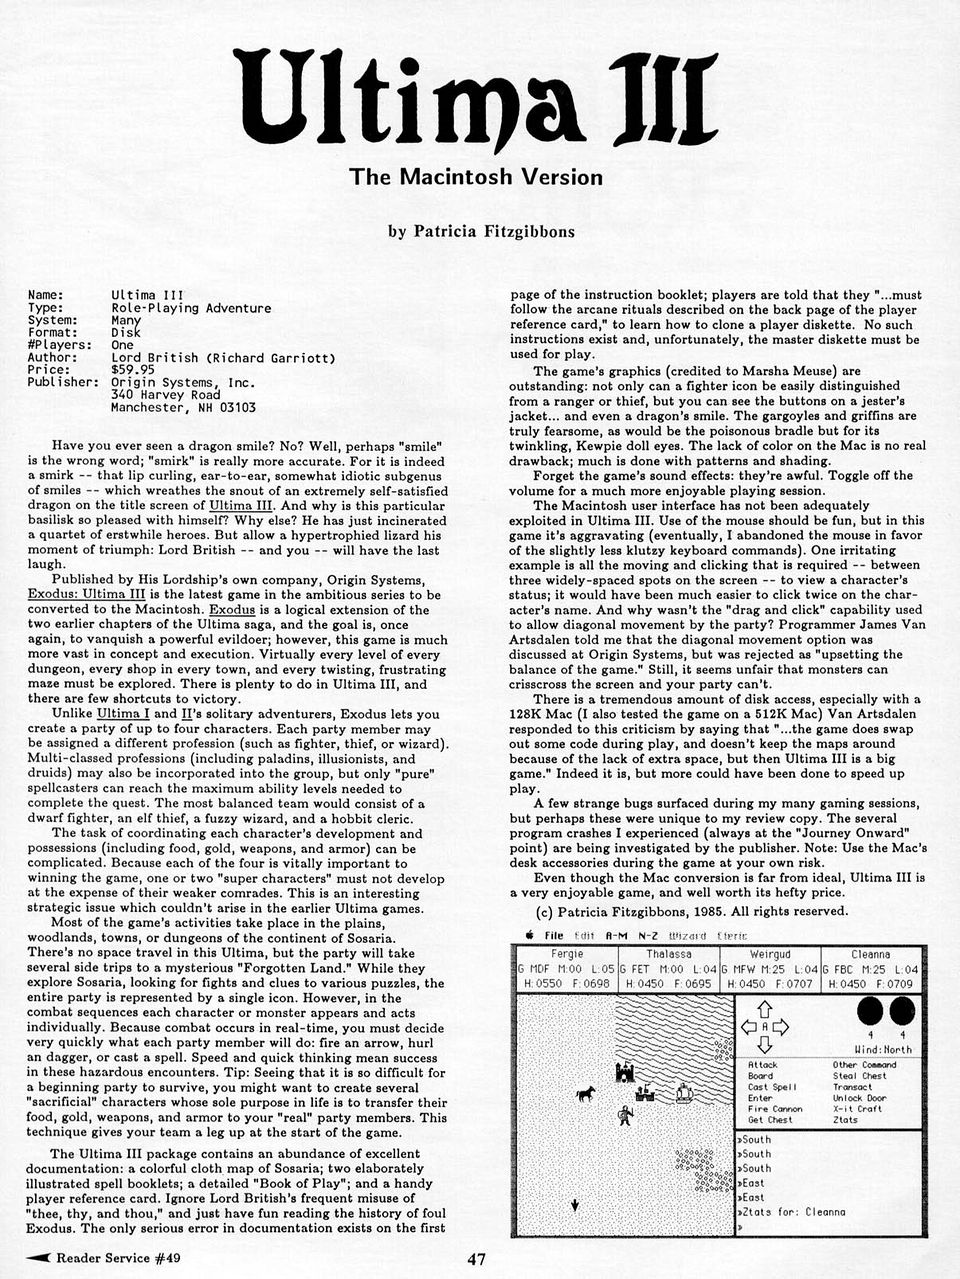 Ultima III: The Macintosh Version